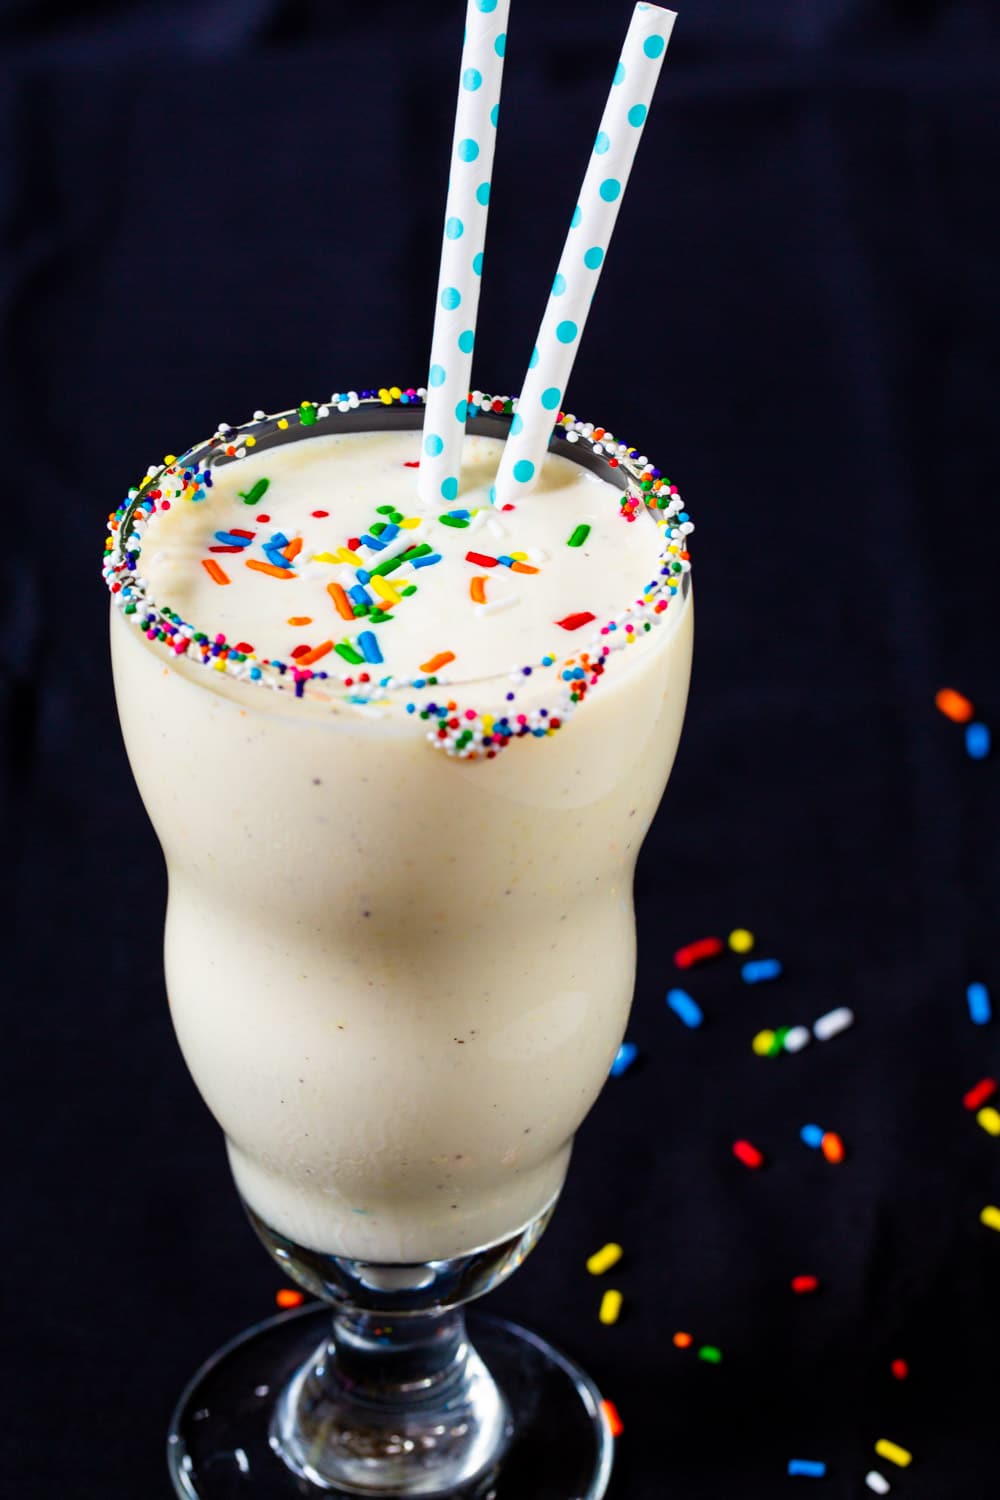 Cake Batter Milkshake in a glass with 2 straws.